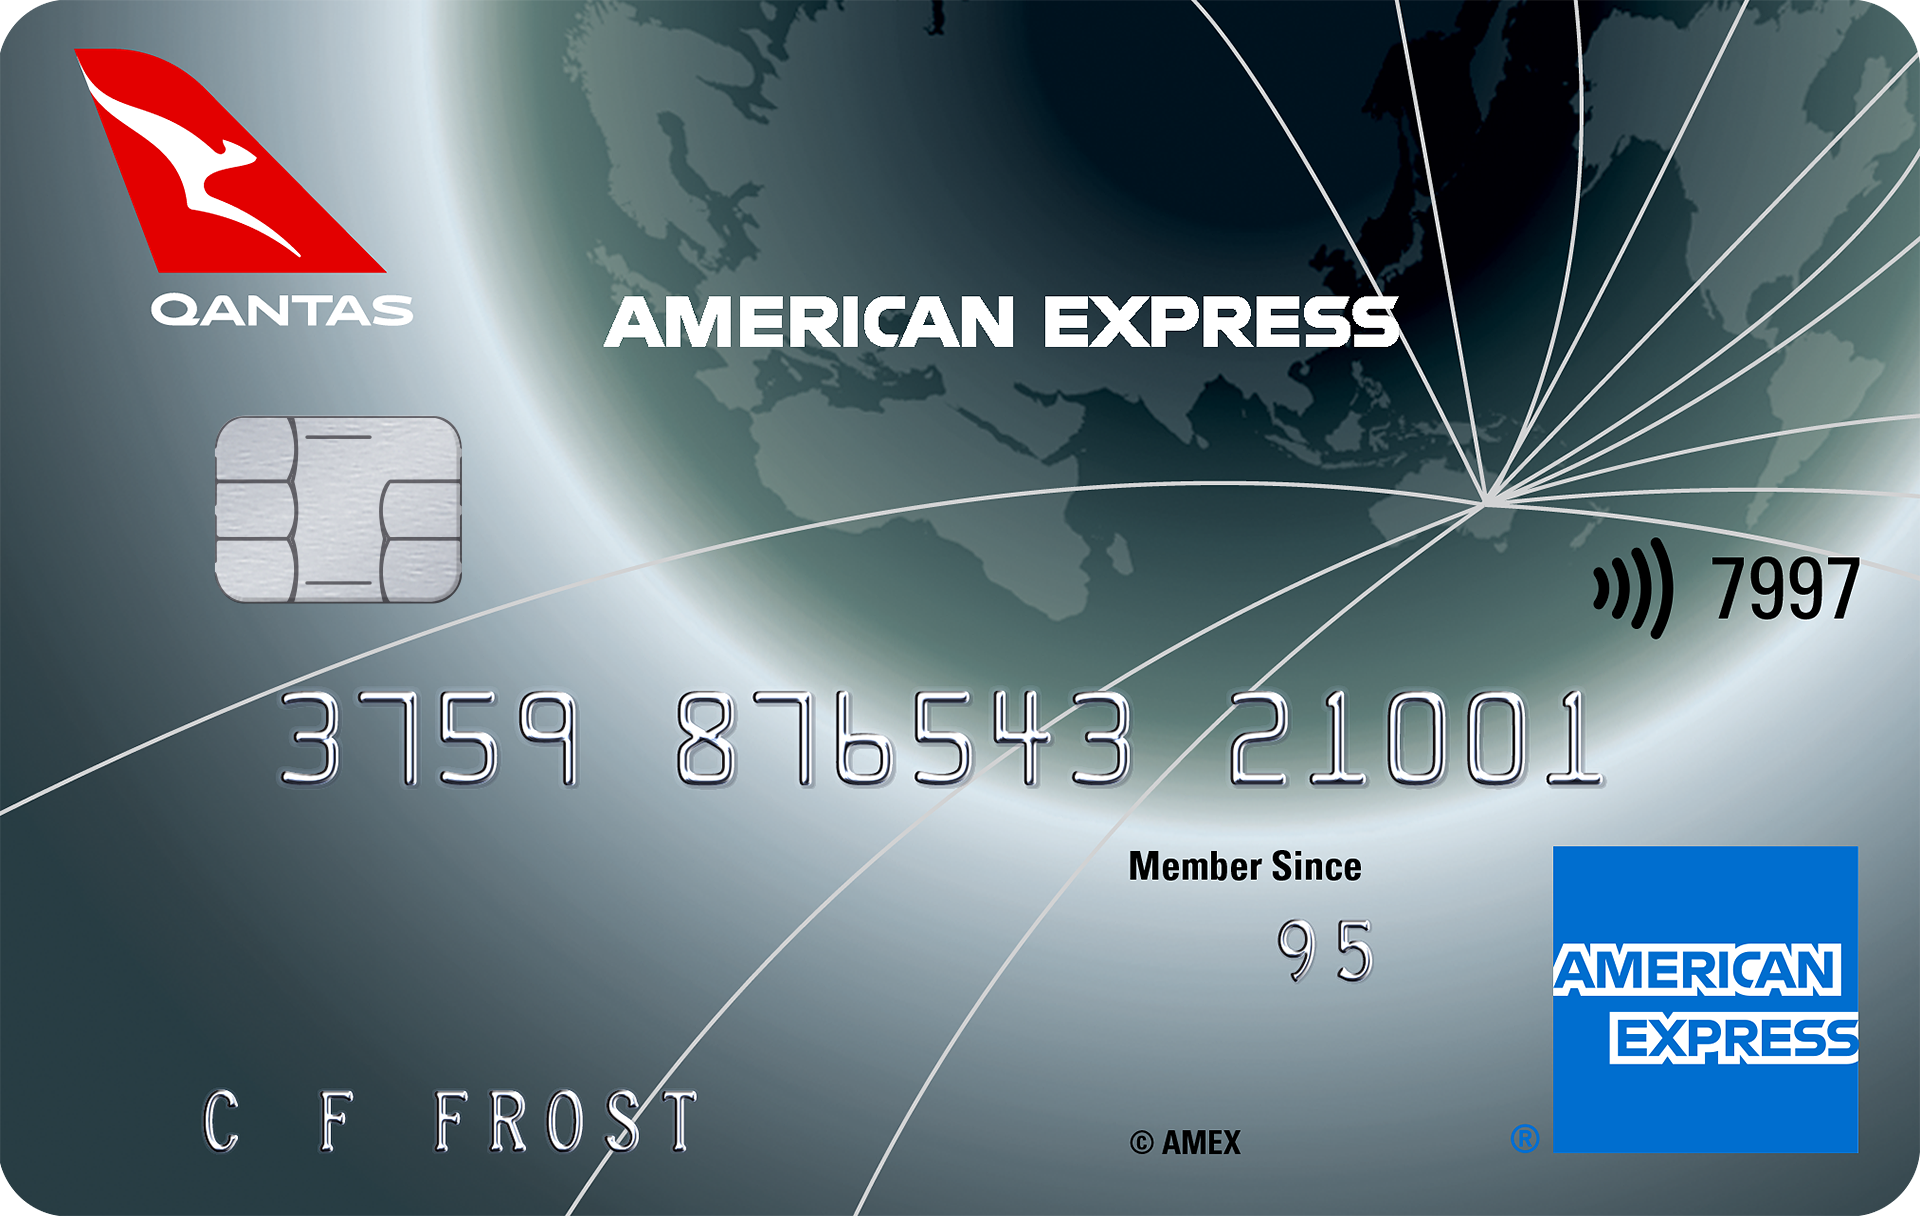 amex qantas business rewards card travel insurance